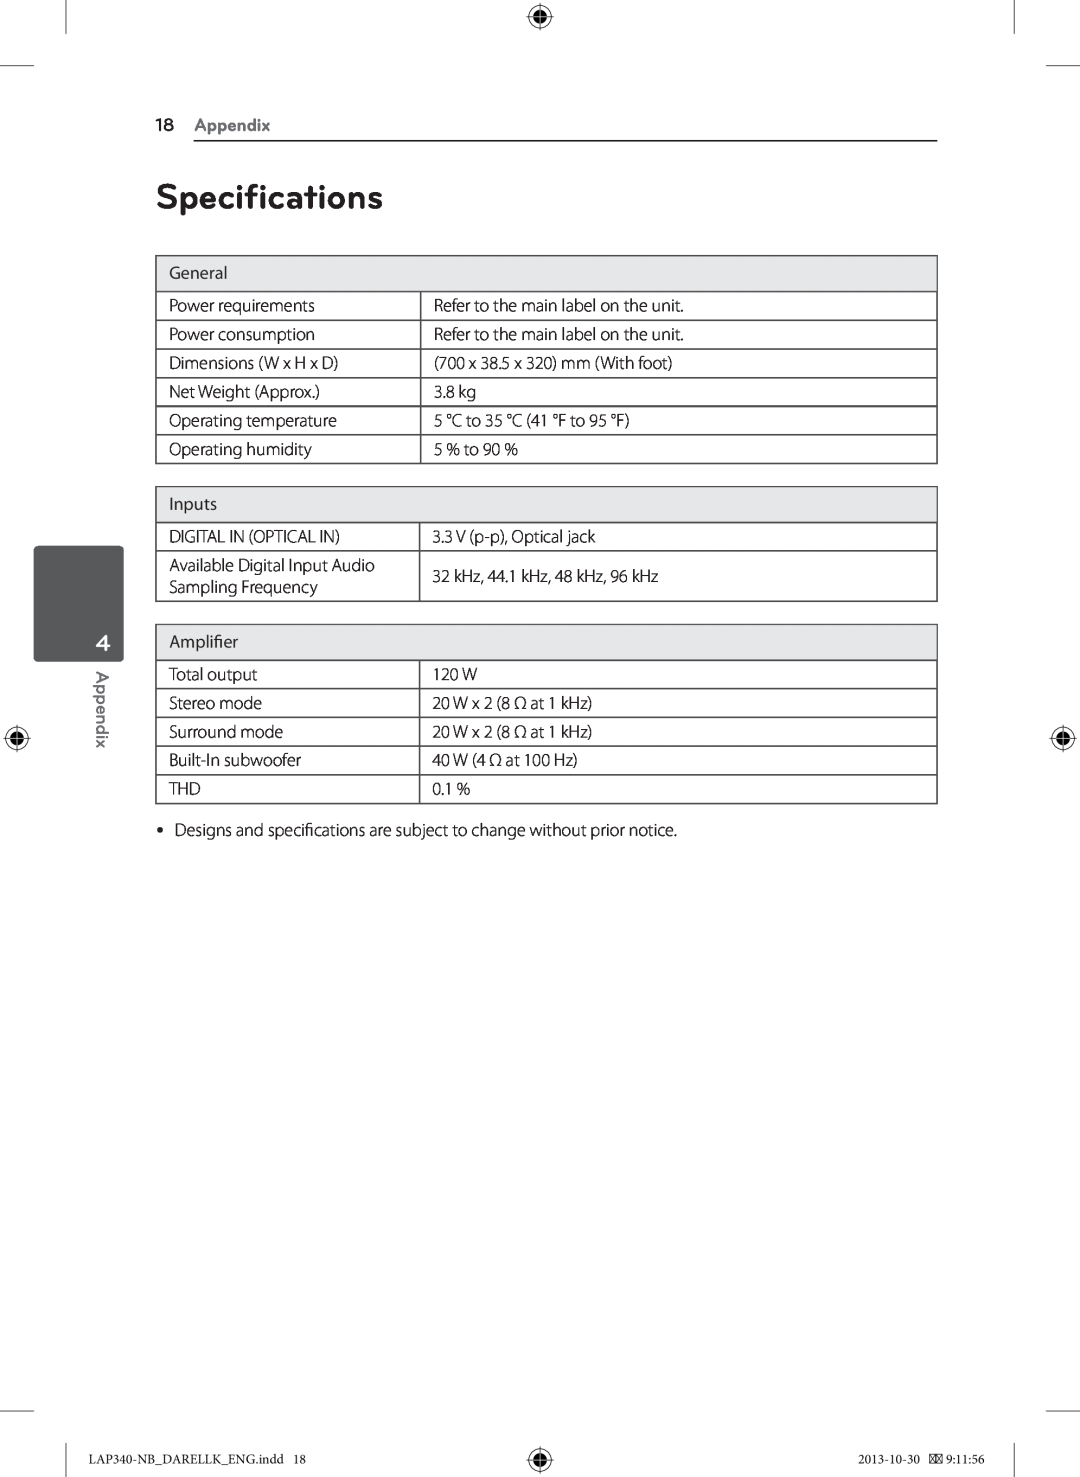 LG Electronics LAP340 owner manual Specifications, Appendix 